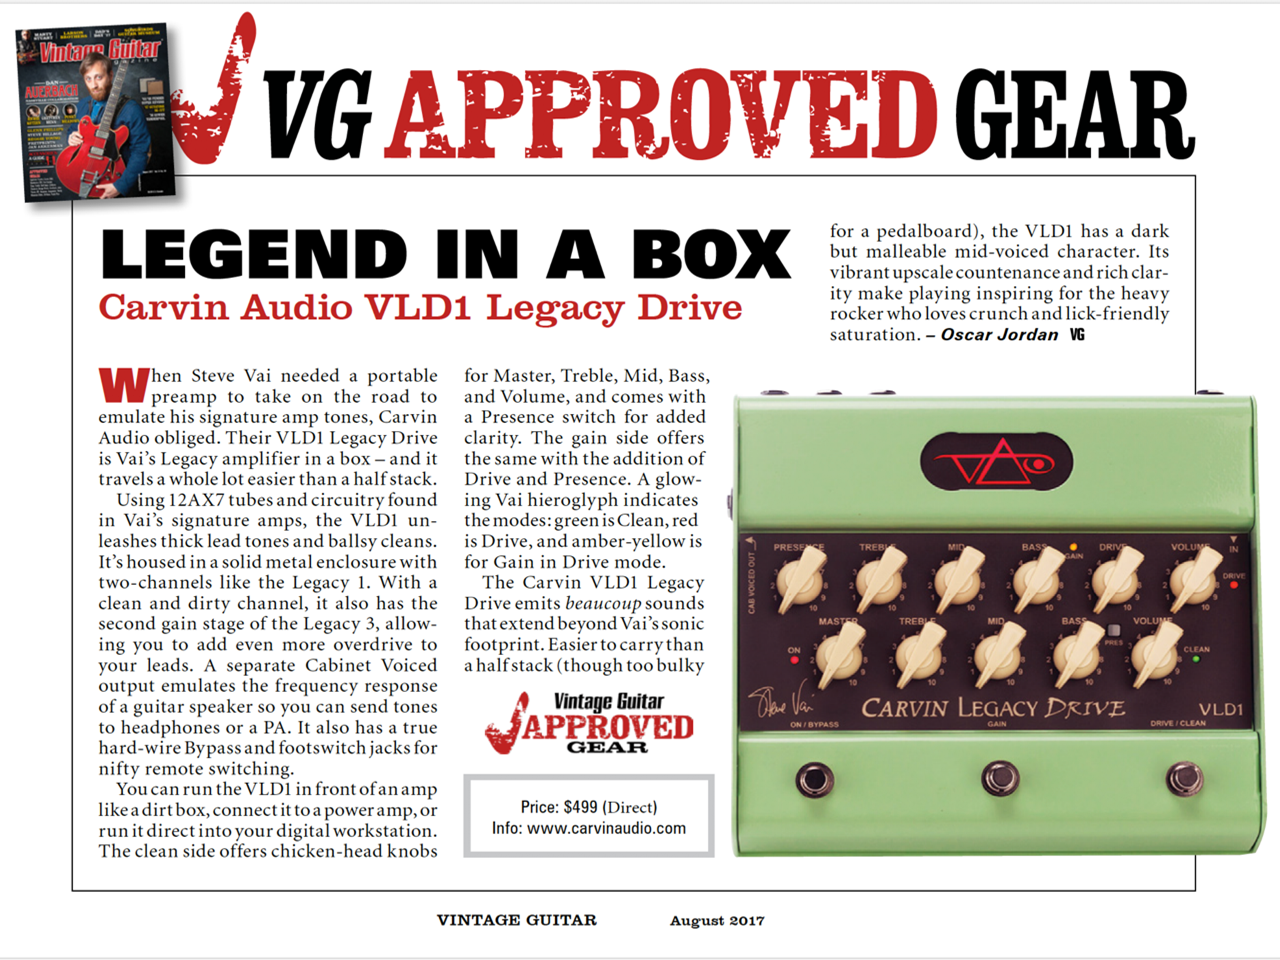 Vintage Guitar Reviews the VLD1 Legacy Drive Pedal